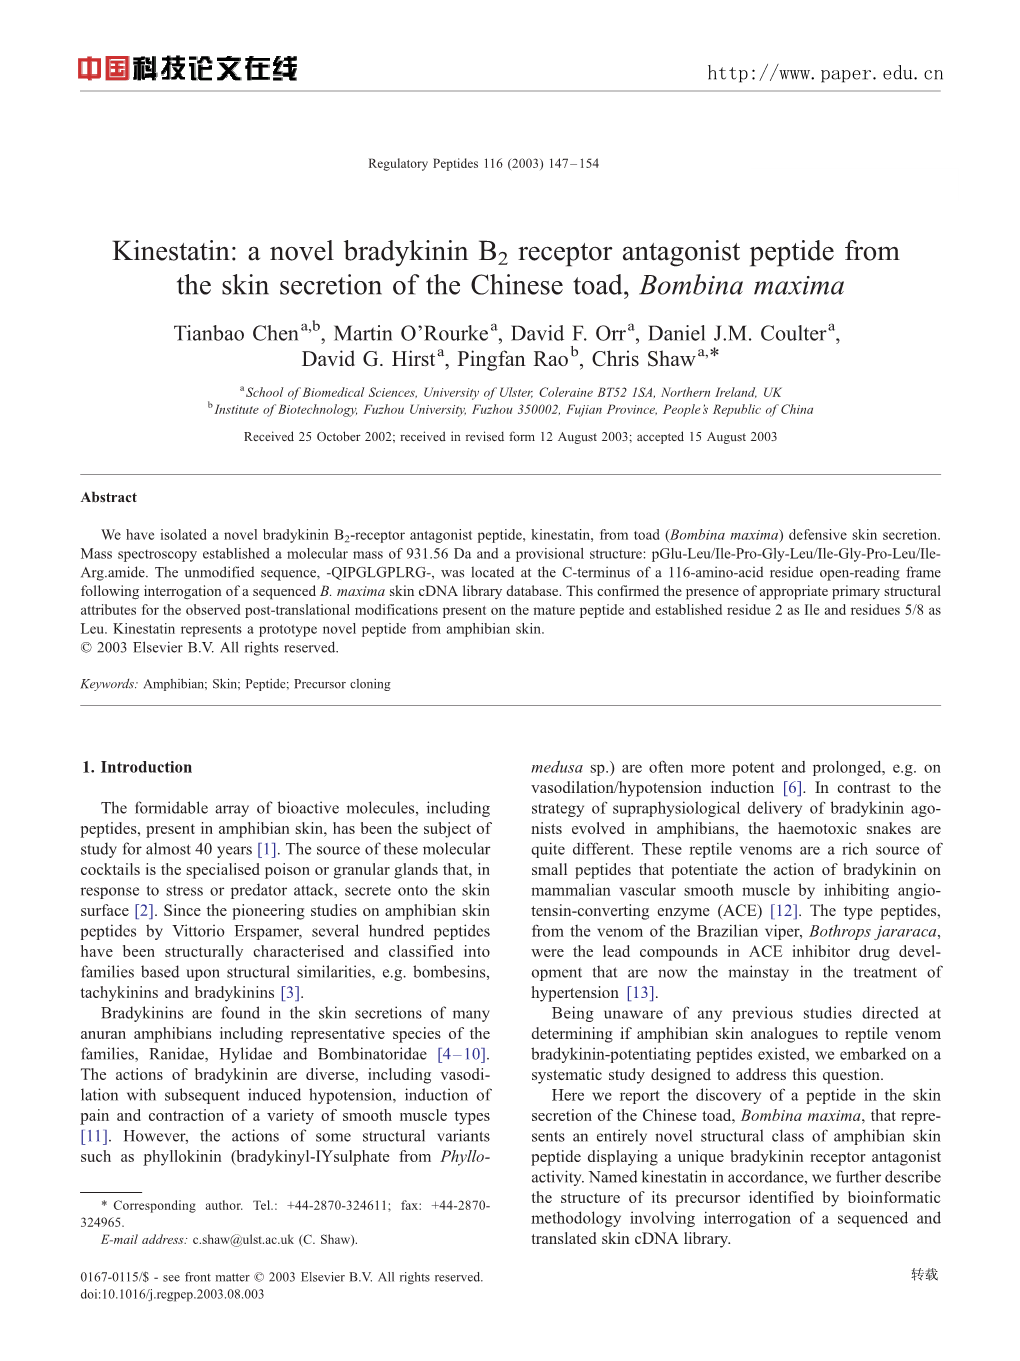 Kinestatin: a Novel Bradykinin B2 Receptor Antagonist Peptide from the Skin Secretion of the Chinese Toad, Bombina Maxima